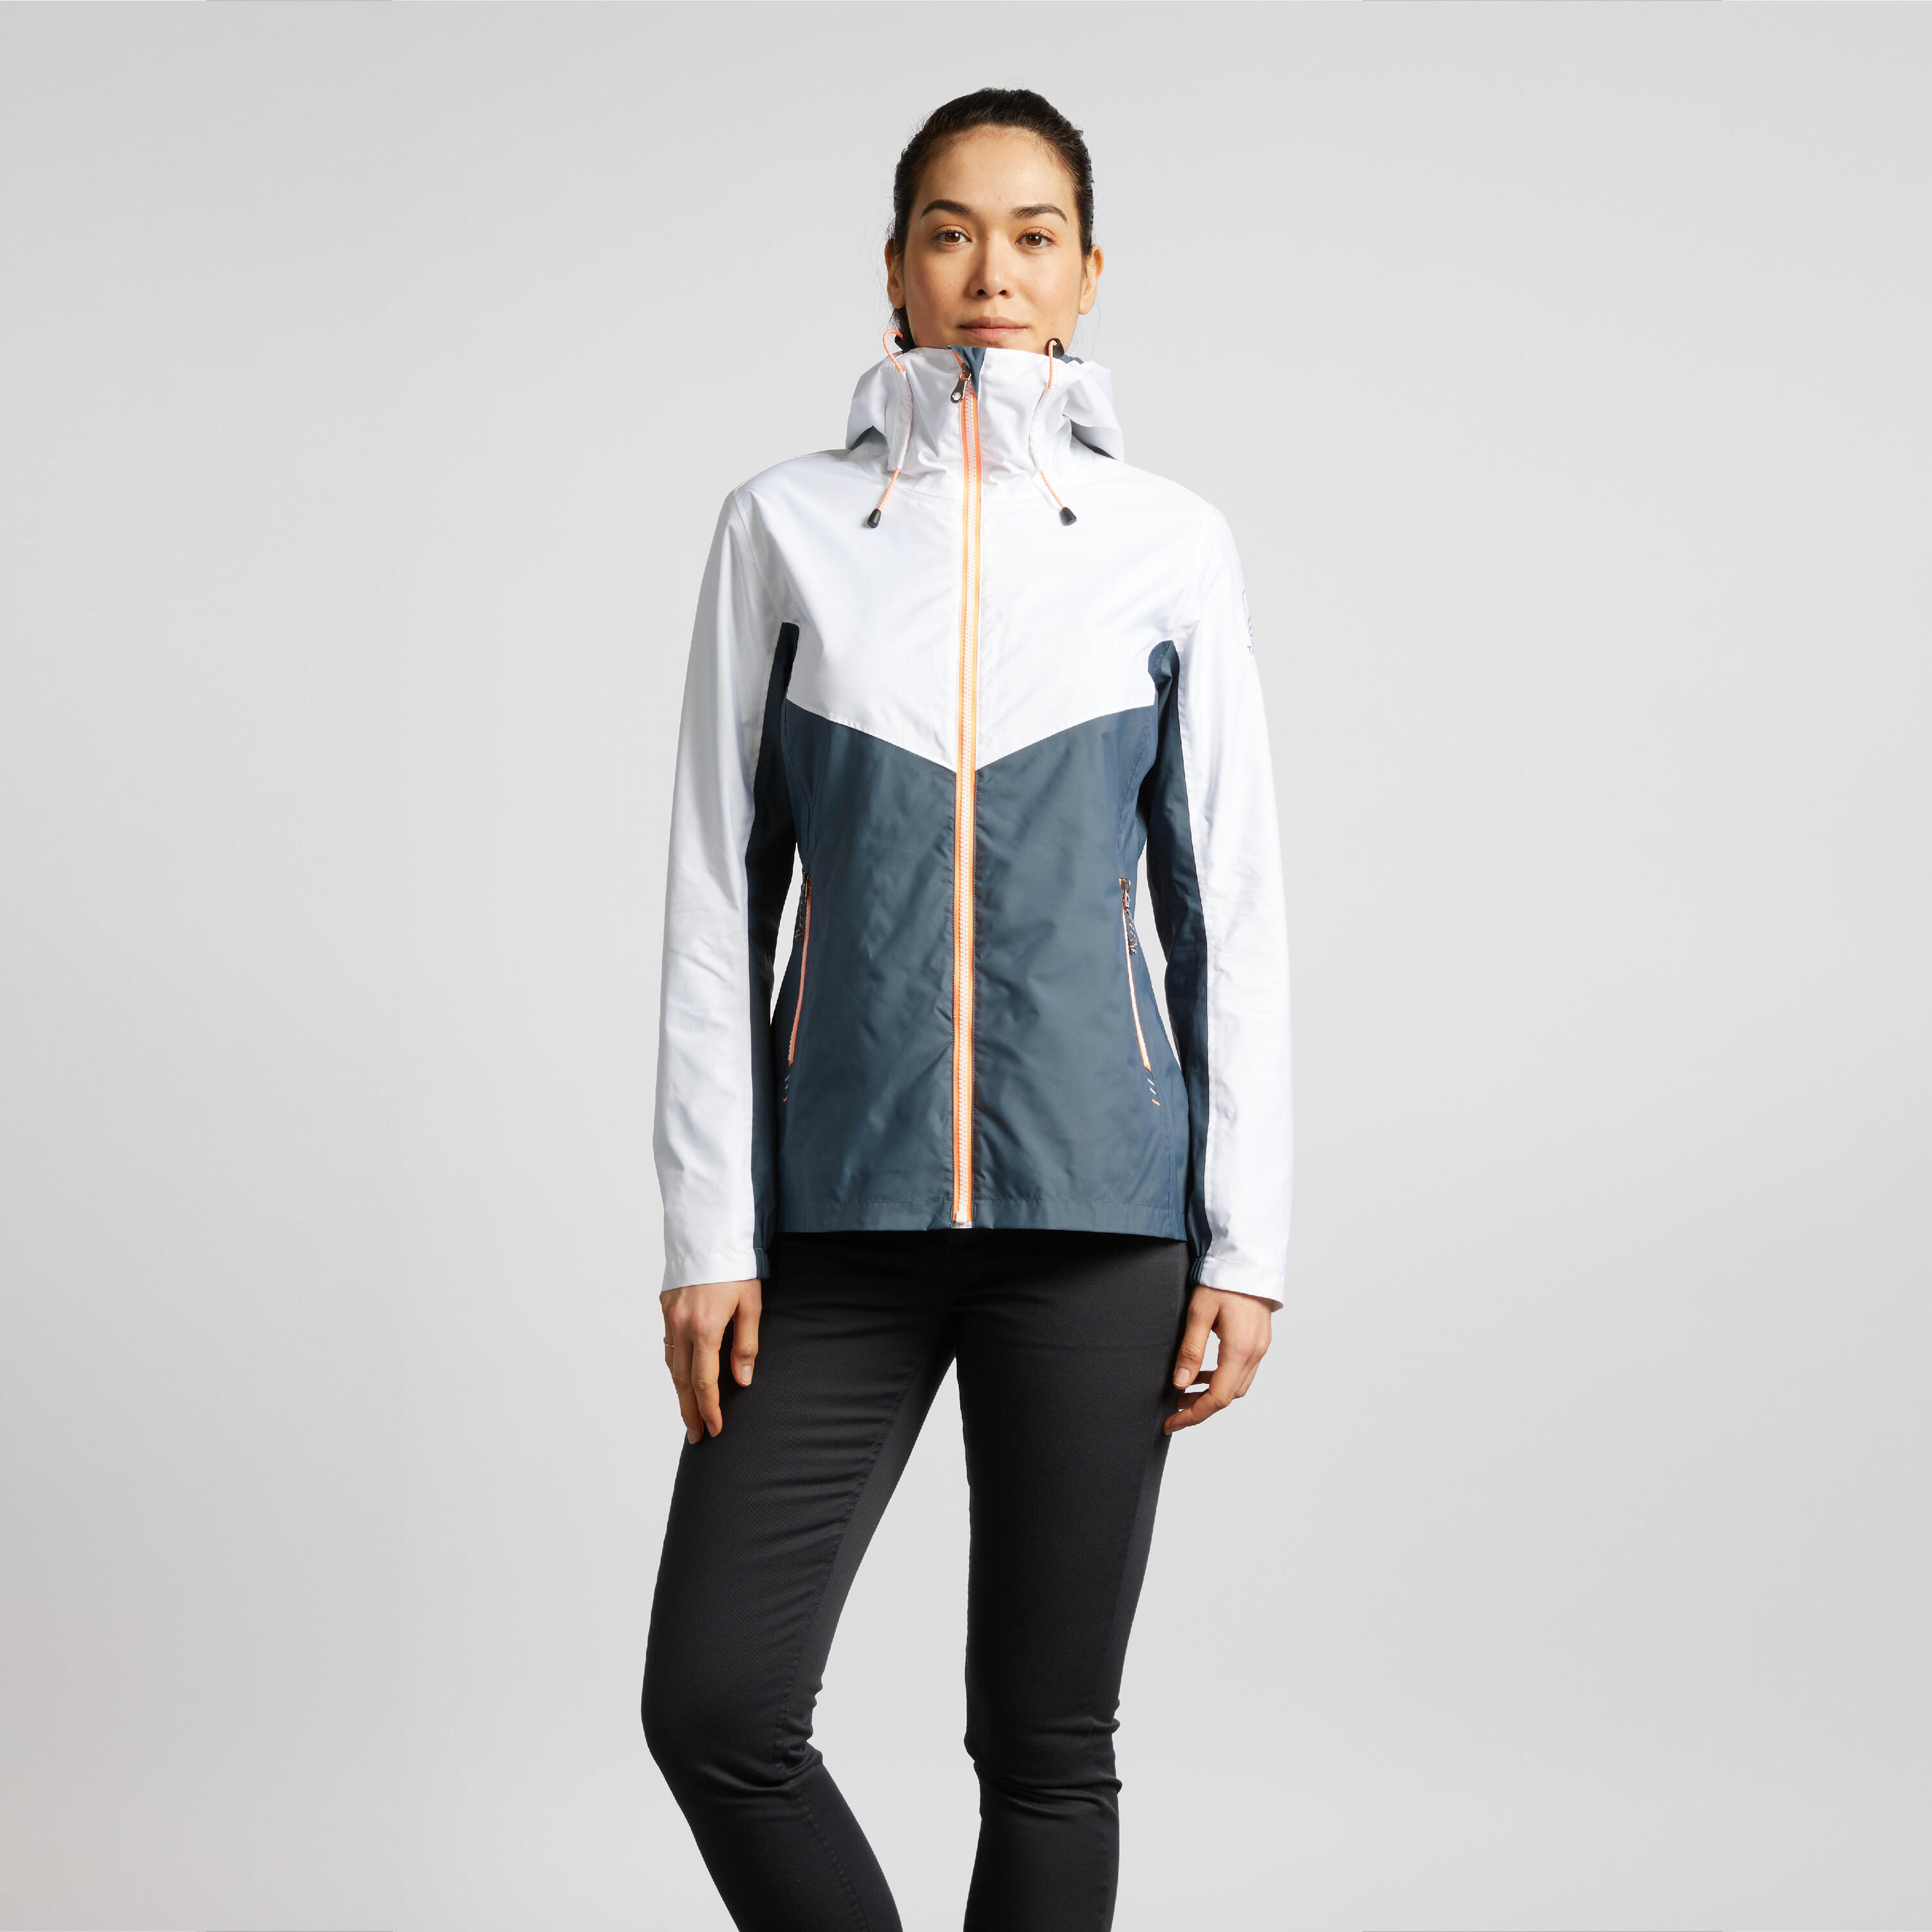 Women’s waterproof sailing jacket 100 - Grey White 10/10